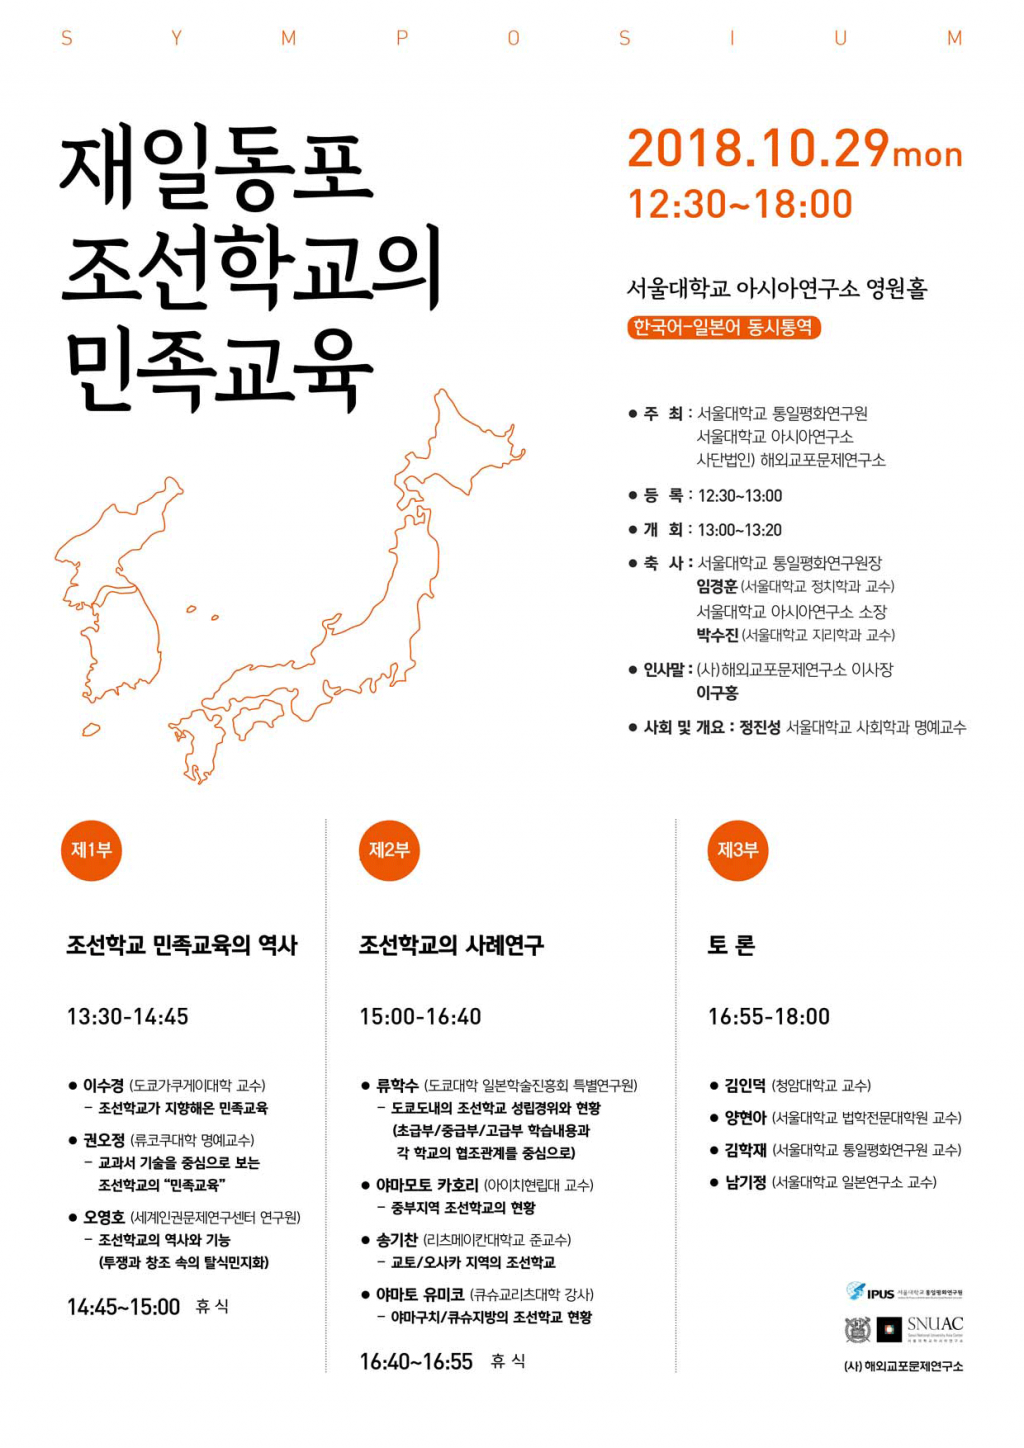 Joseon School’s Ethnic Education for Korean Residents in Japan